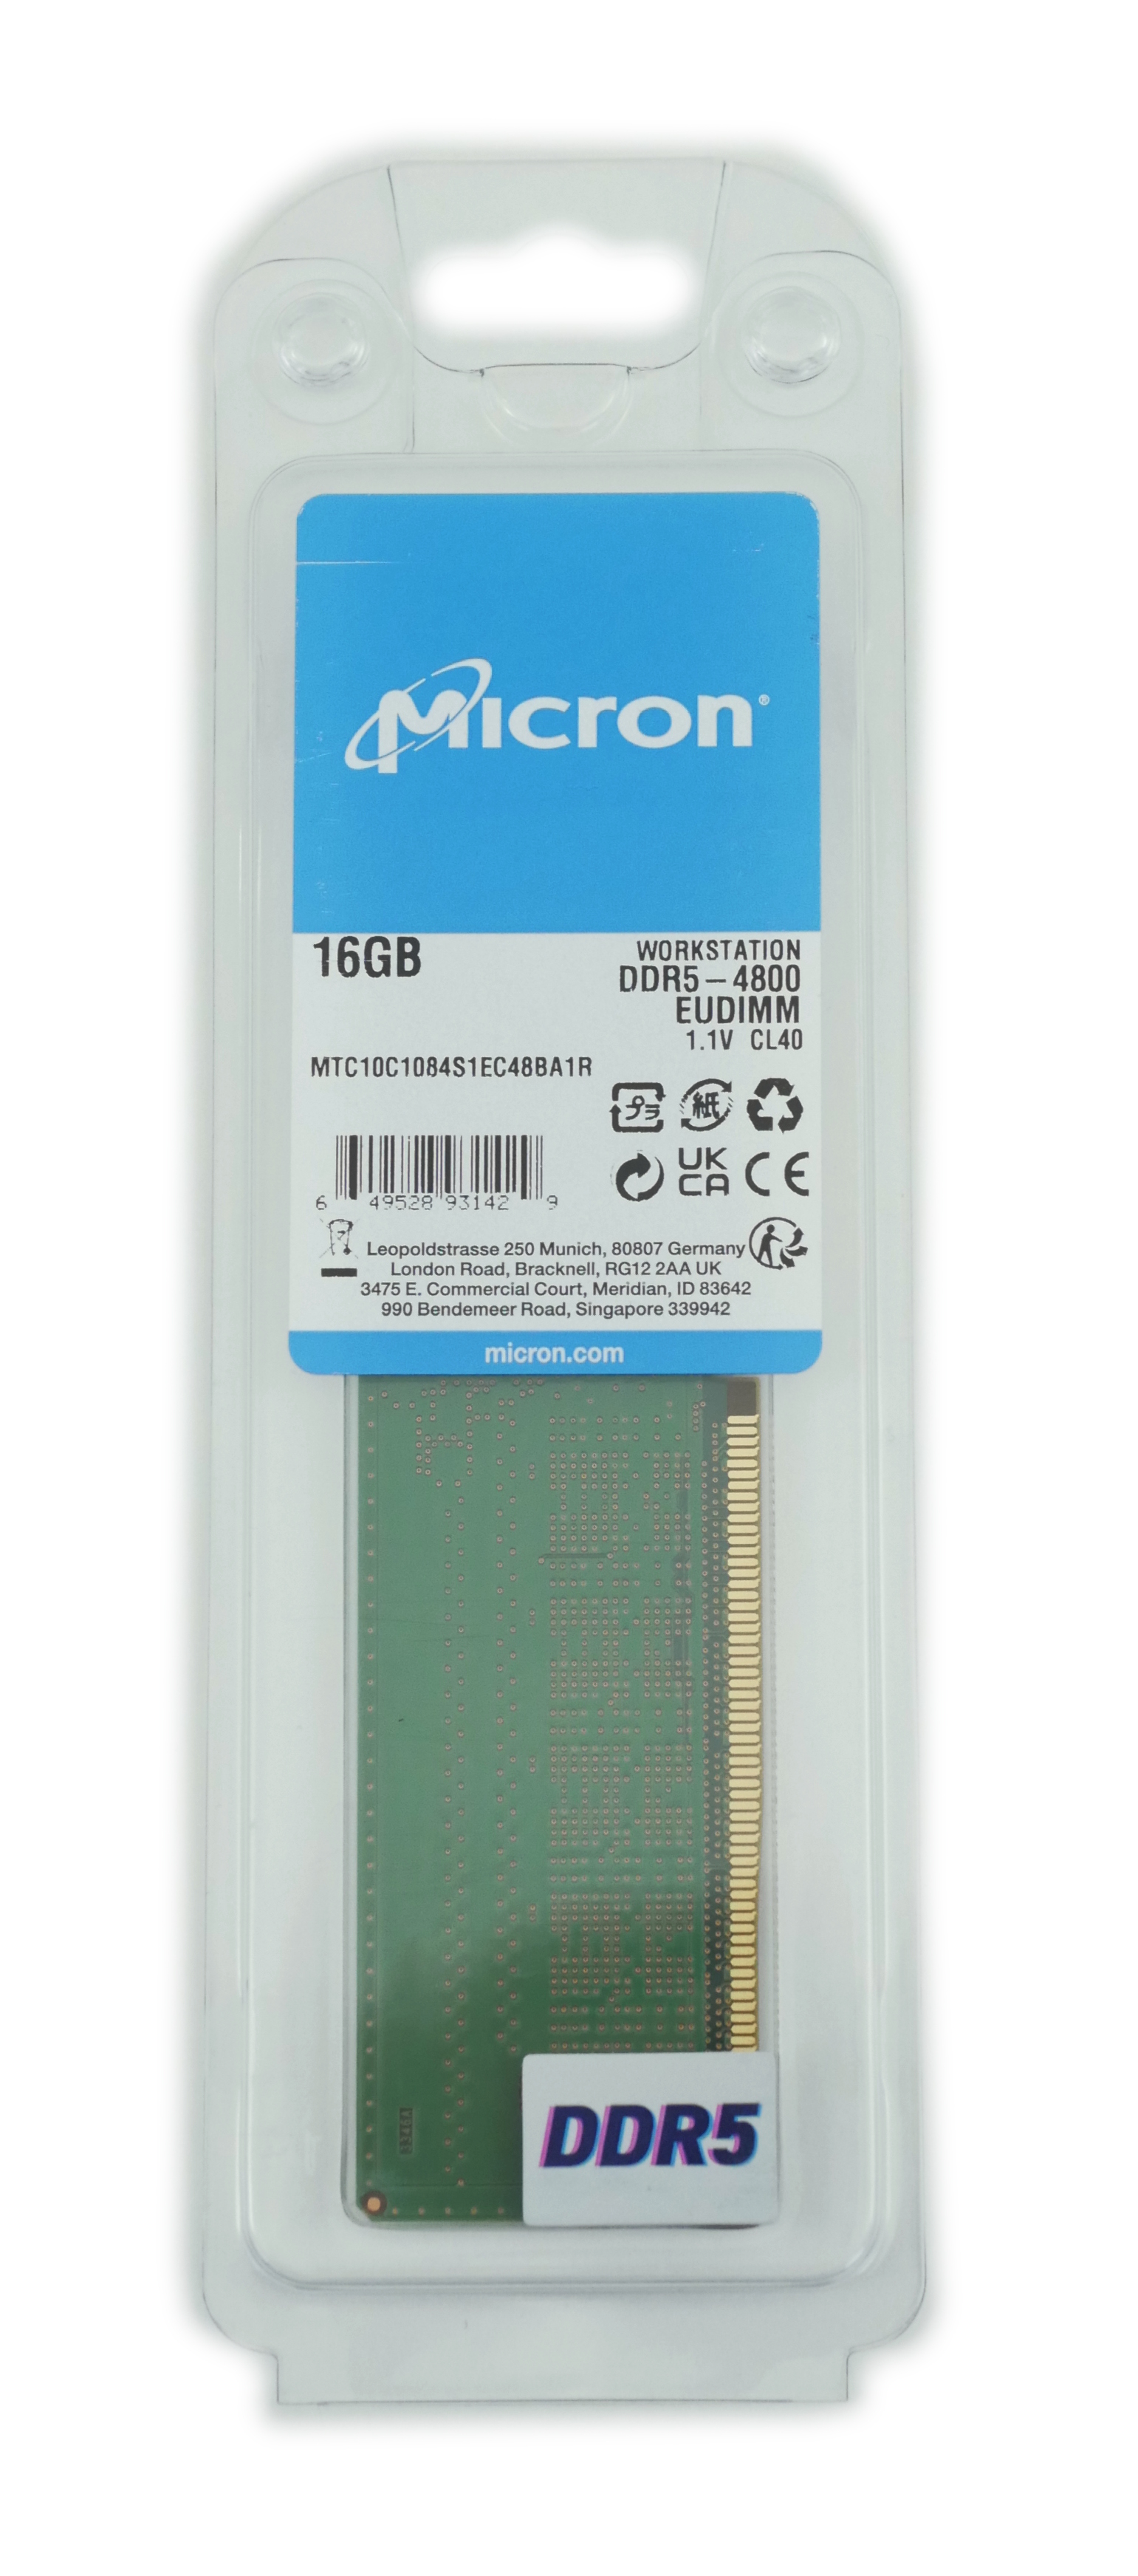 Micron 16GB MTC10C1084S1EC48BA1 PC5-4800B DDR5 288pin EuDIMM Unbuff